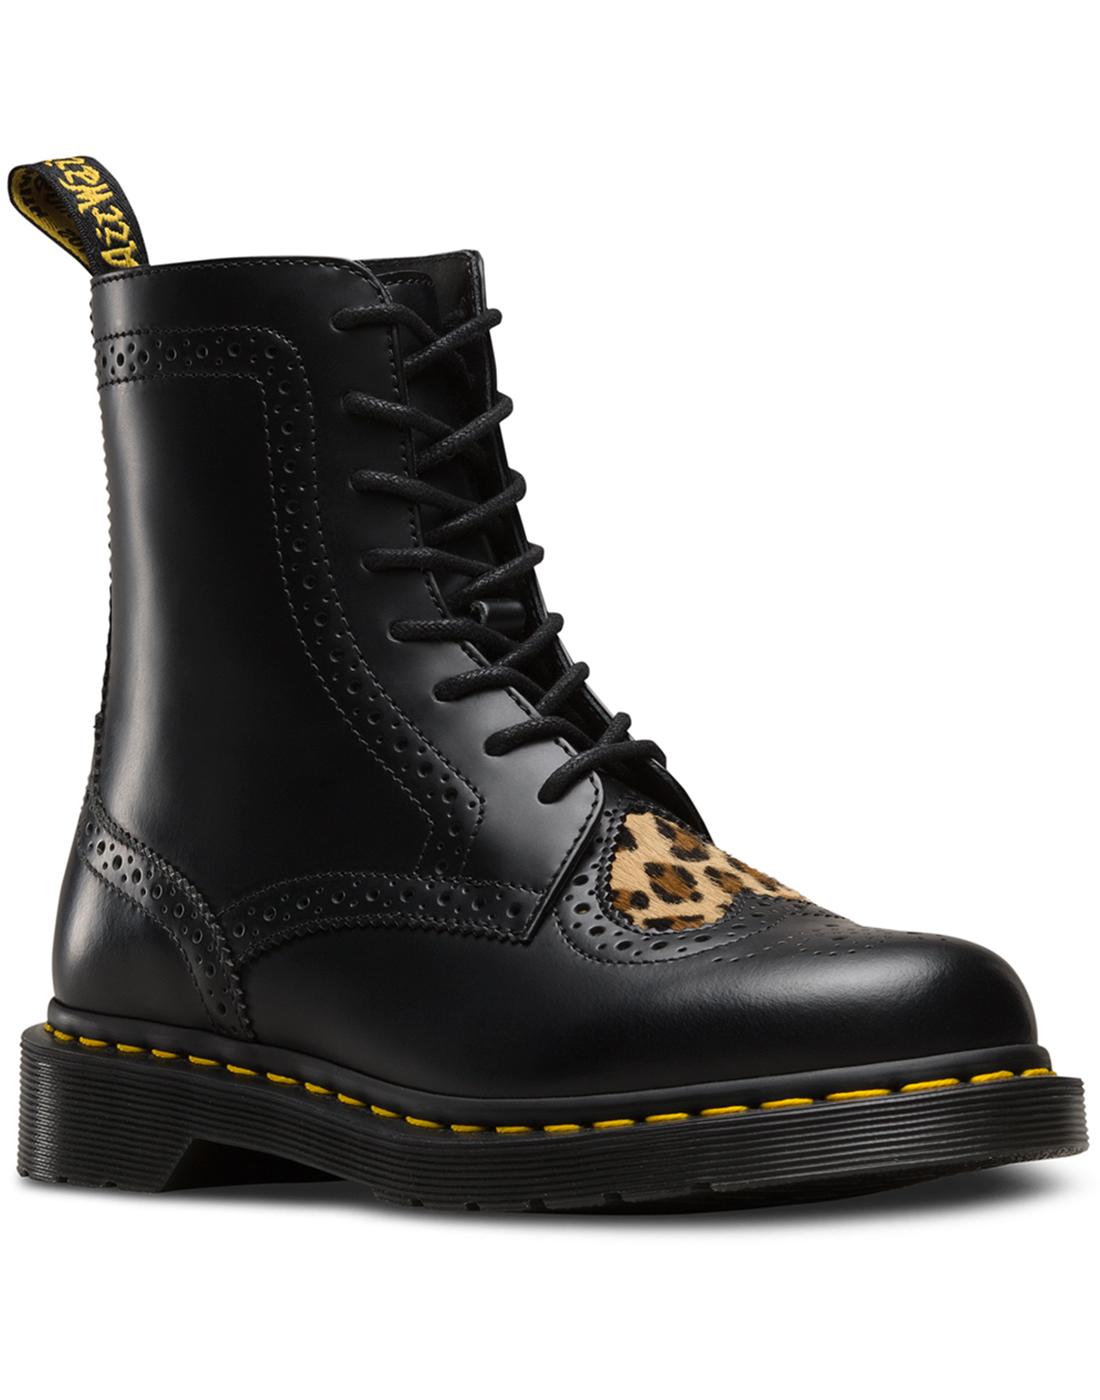 leopard doc martens boots